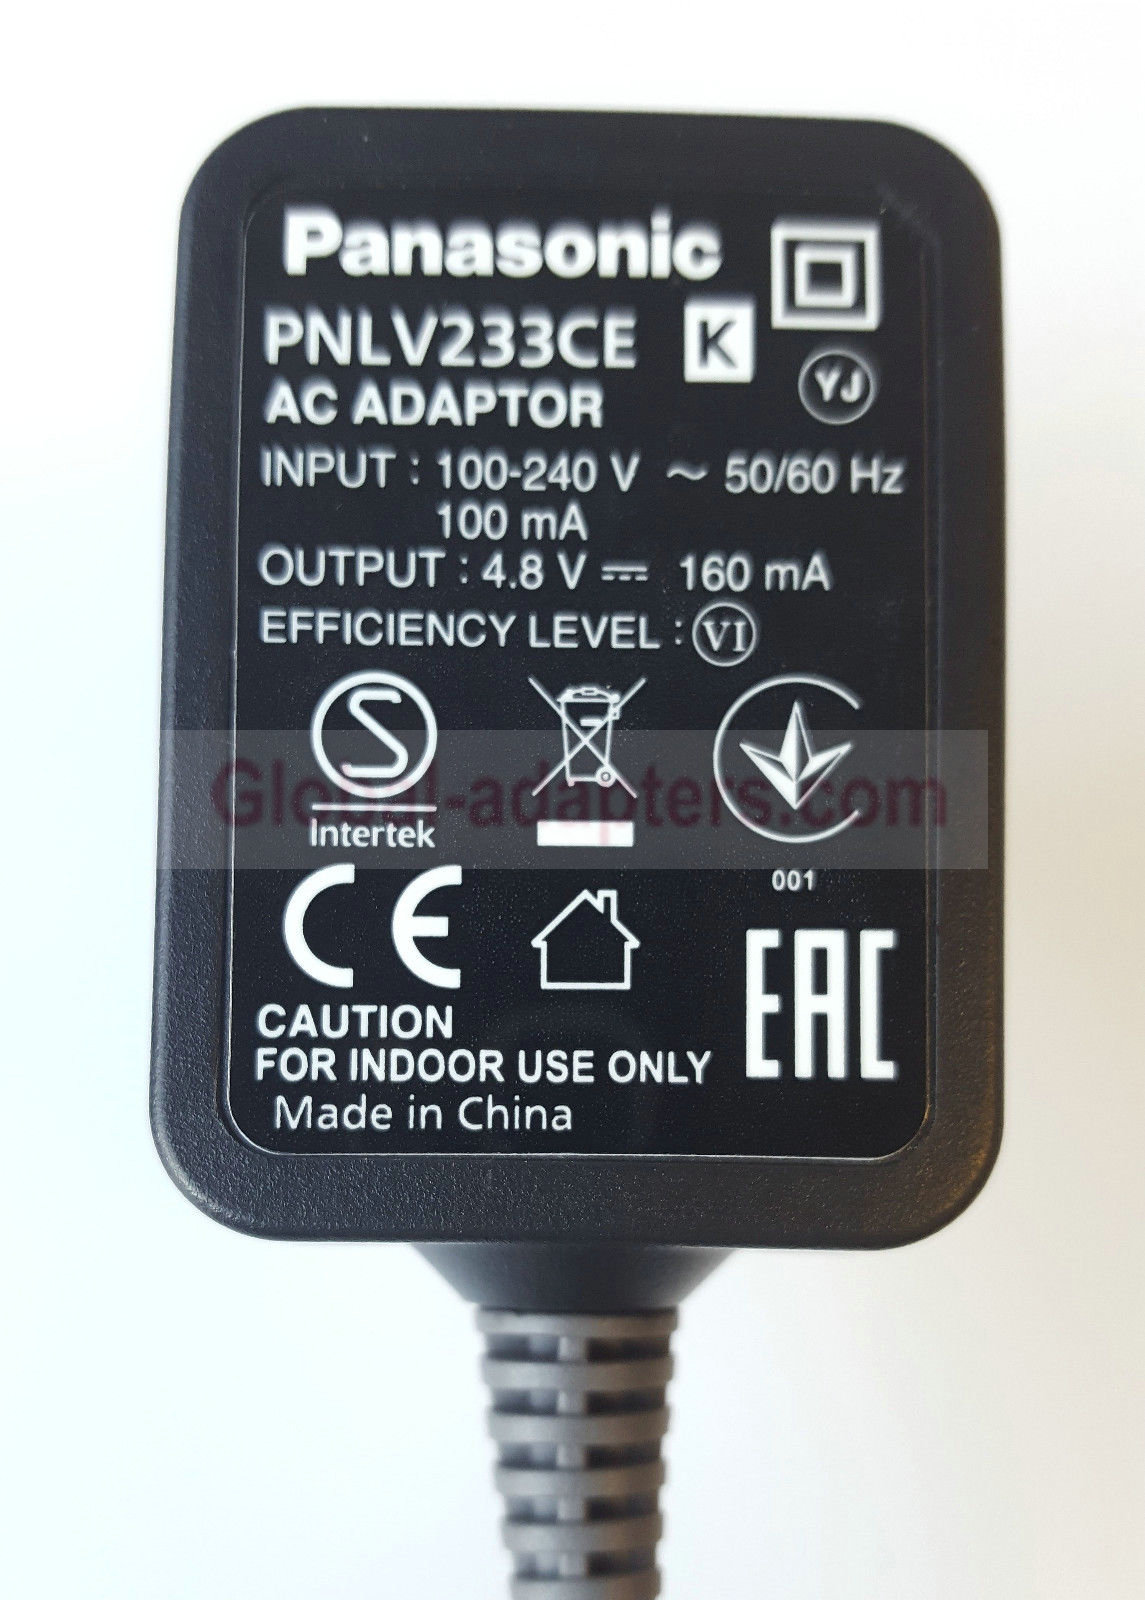 NEW 4.8V 0.16A Panasonic PNLV233CE Ac Adapter